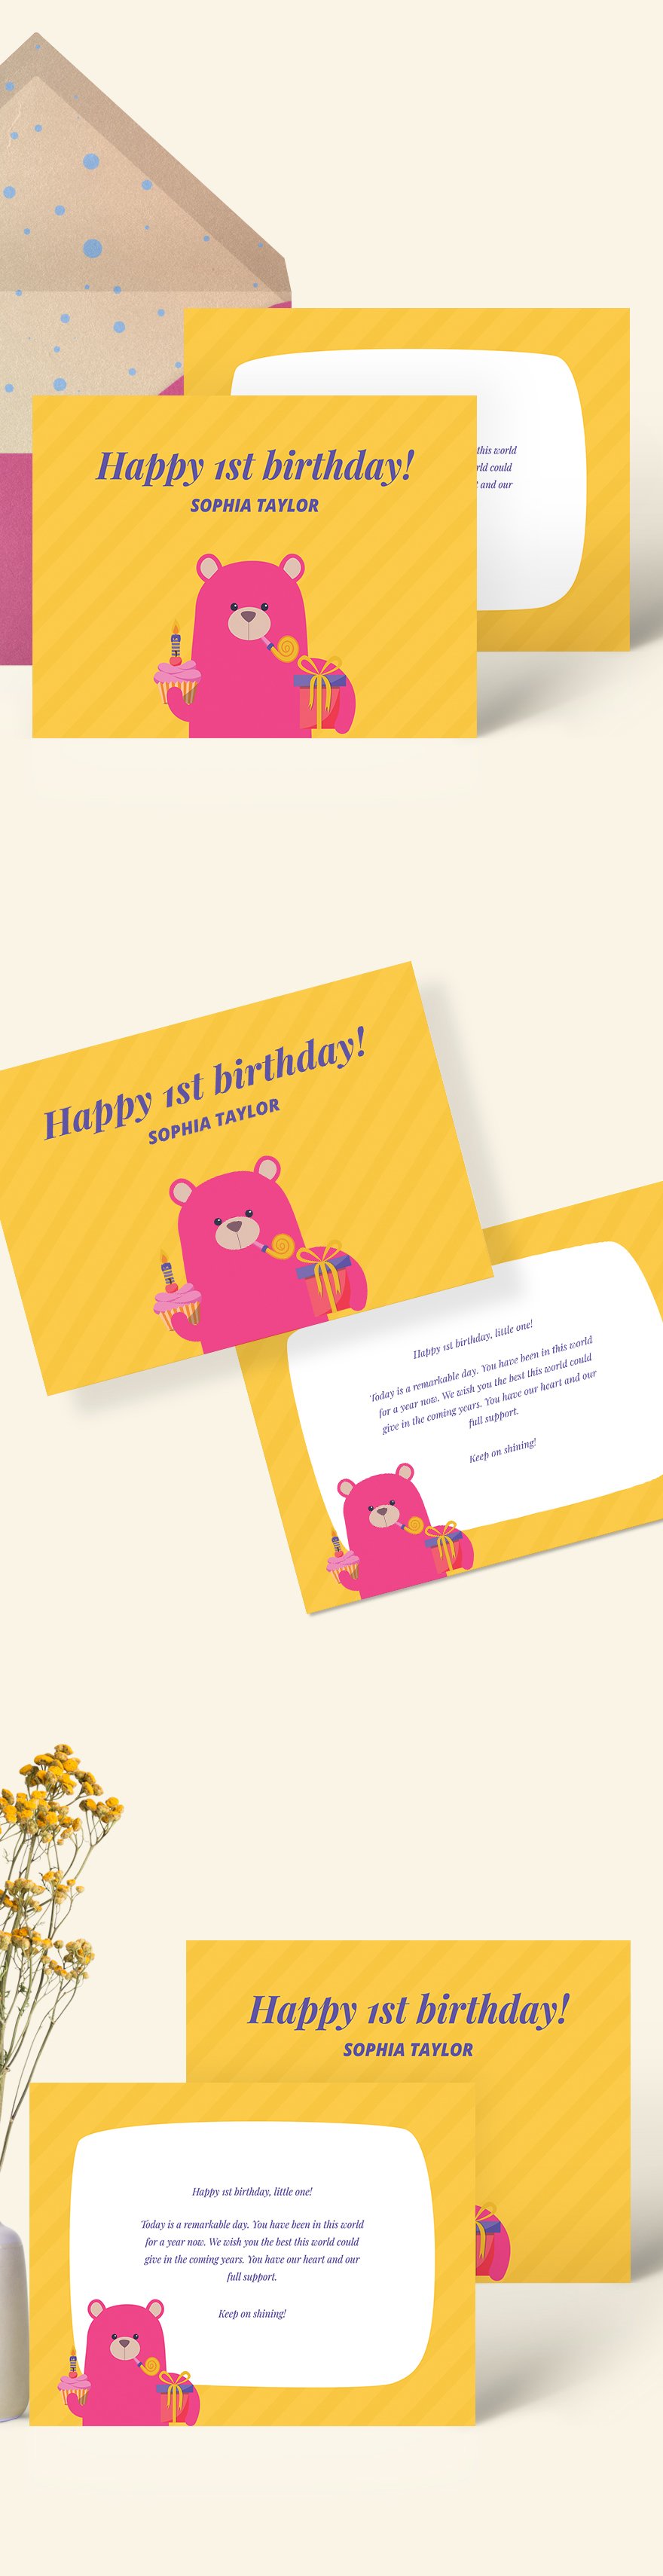 1st Birthday Greeting Card Template Google Docs, Illustrator, Word